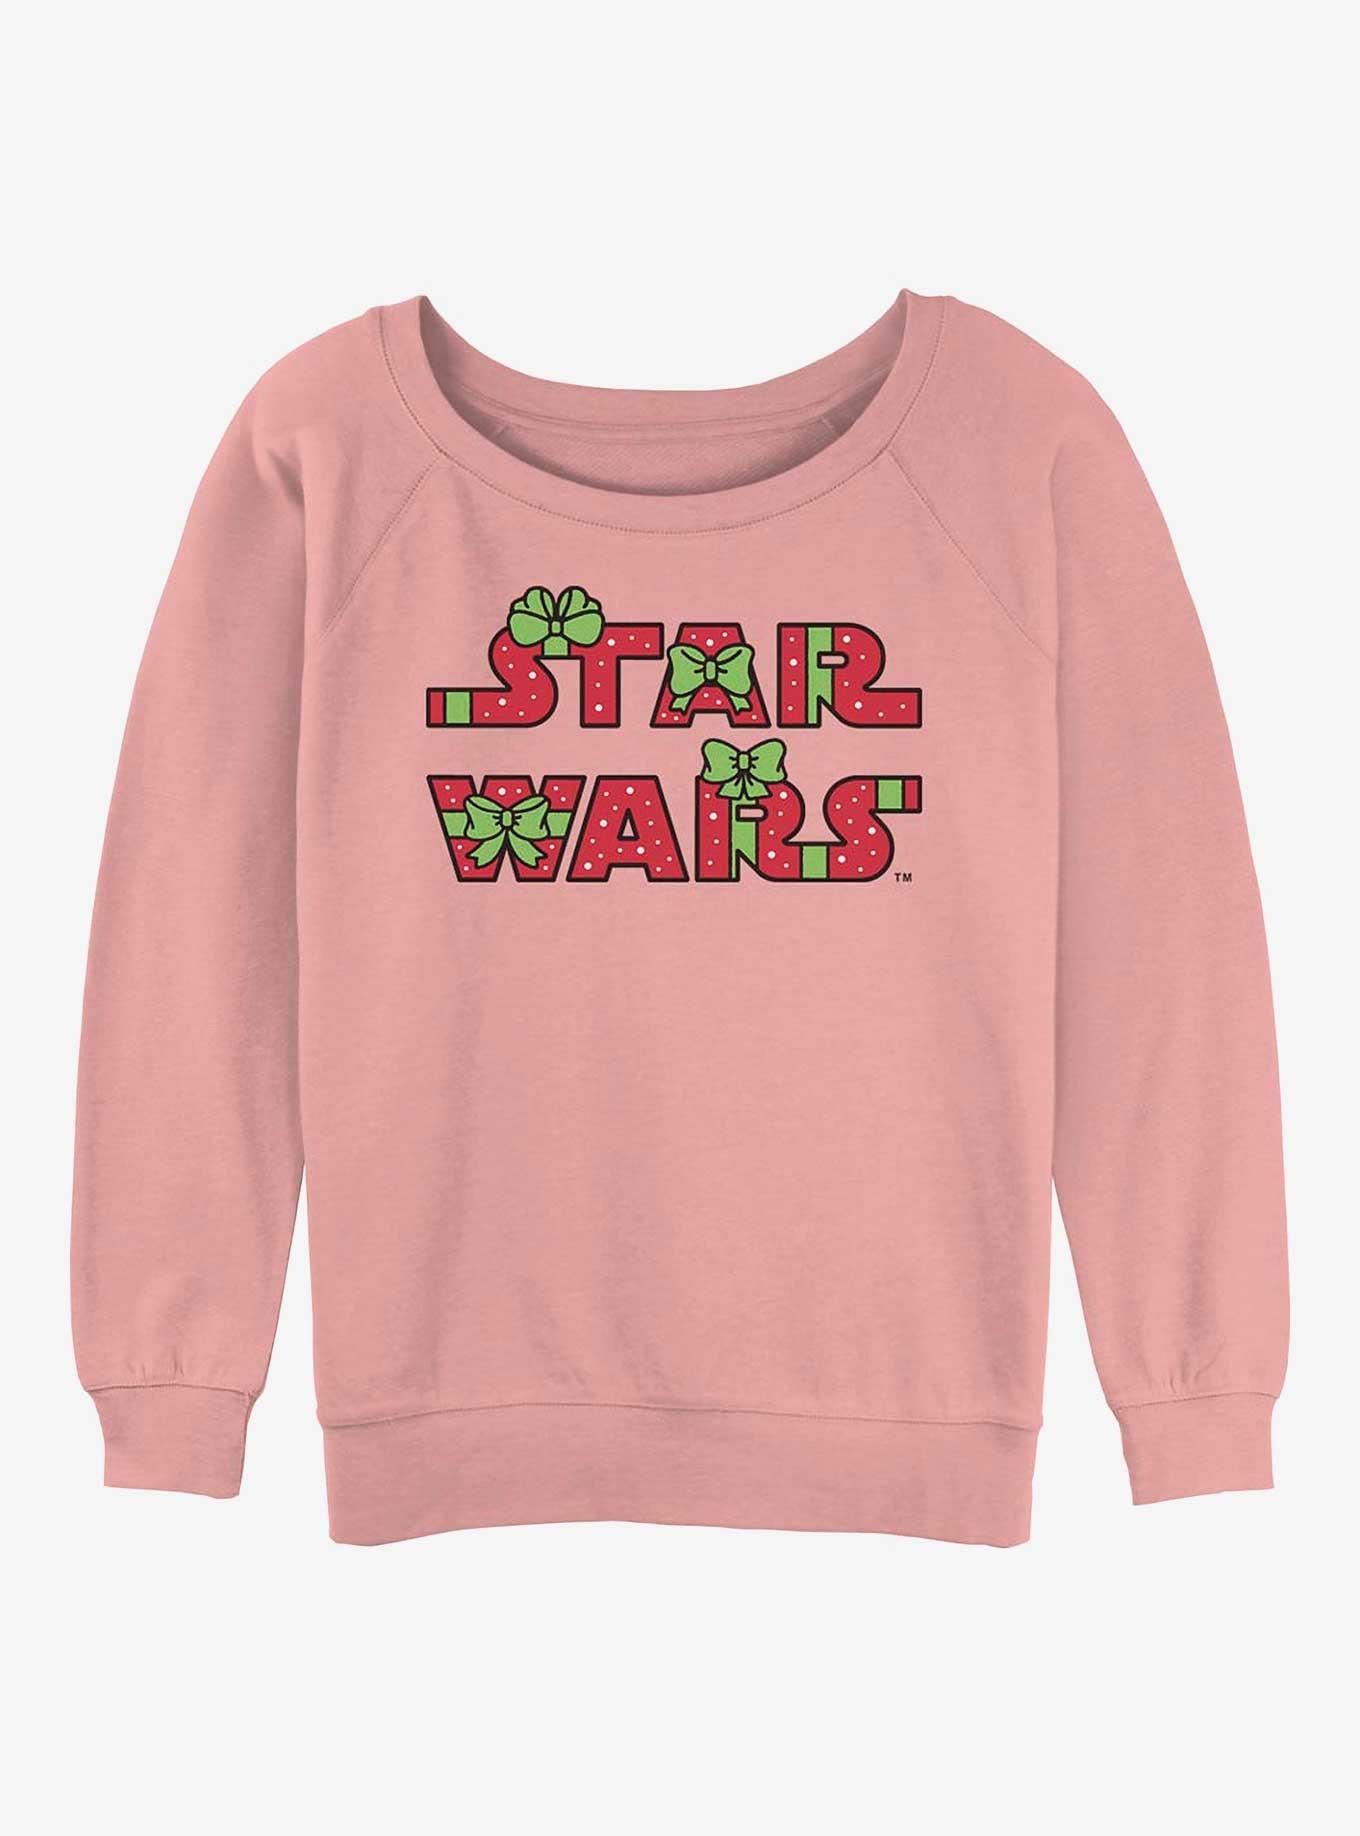 Star Wars Gift Wrapped Logo Girls Slouchy Sweatshirt